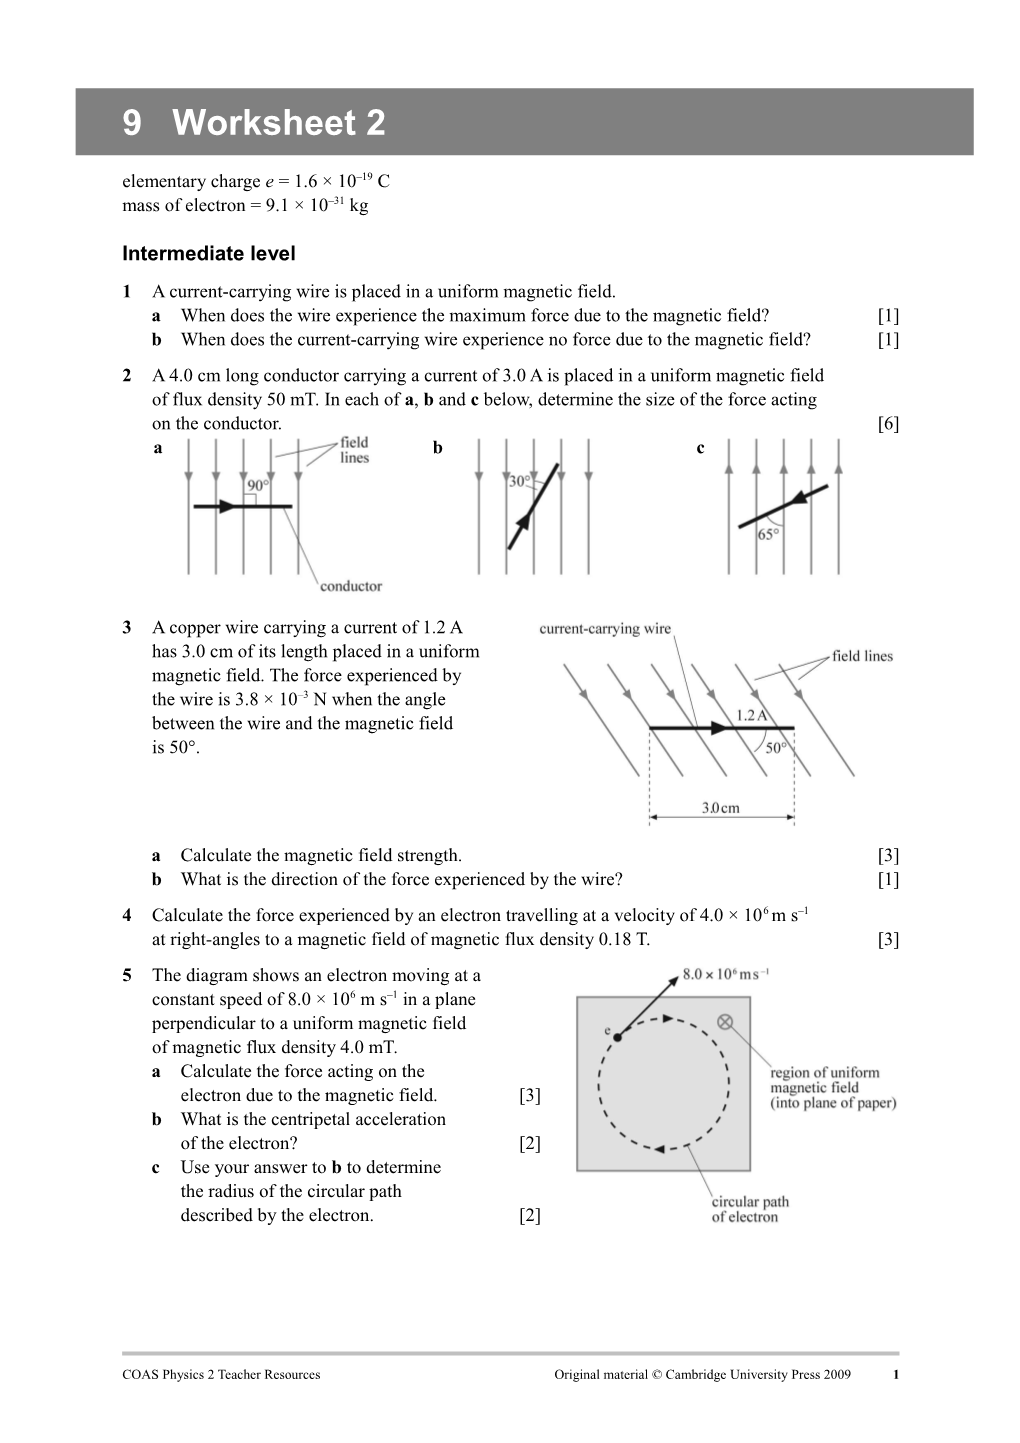 COAS Physics 2 Teacher Resources Original Material Cambridge University Press 2009 2